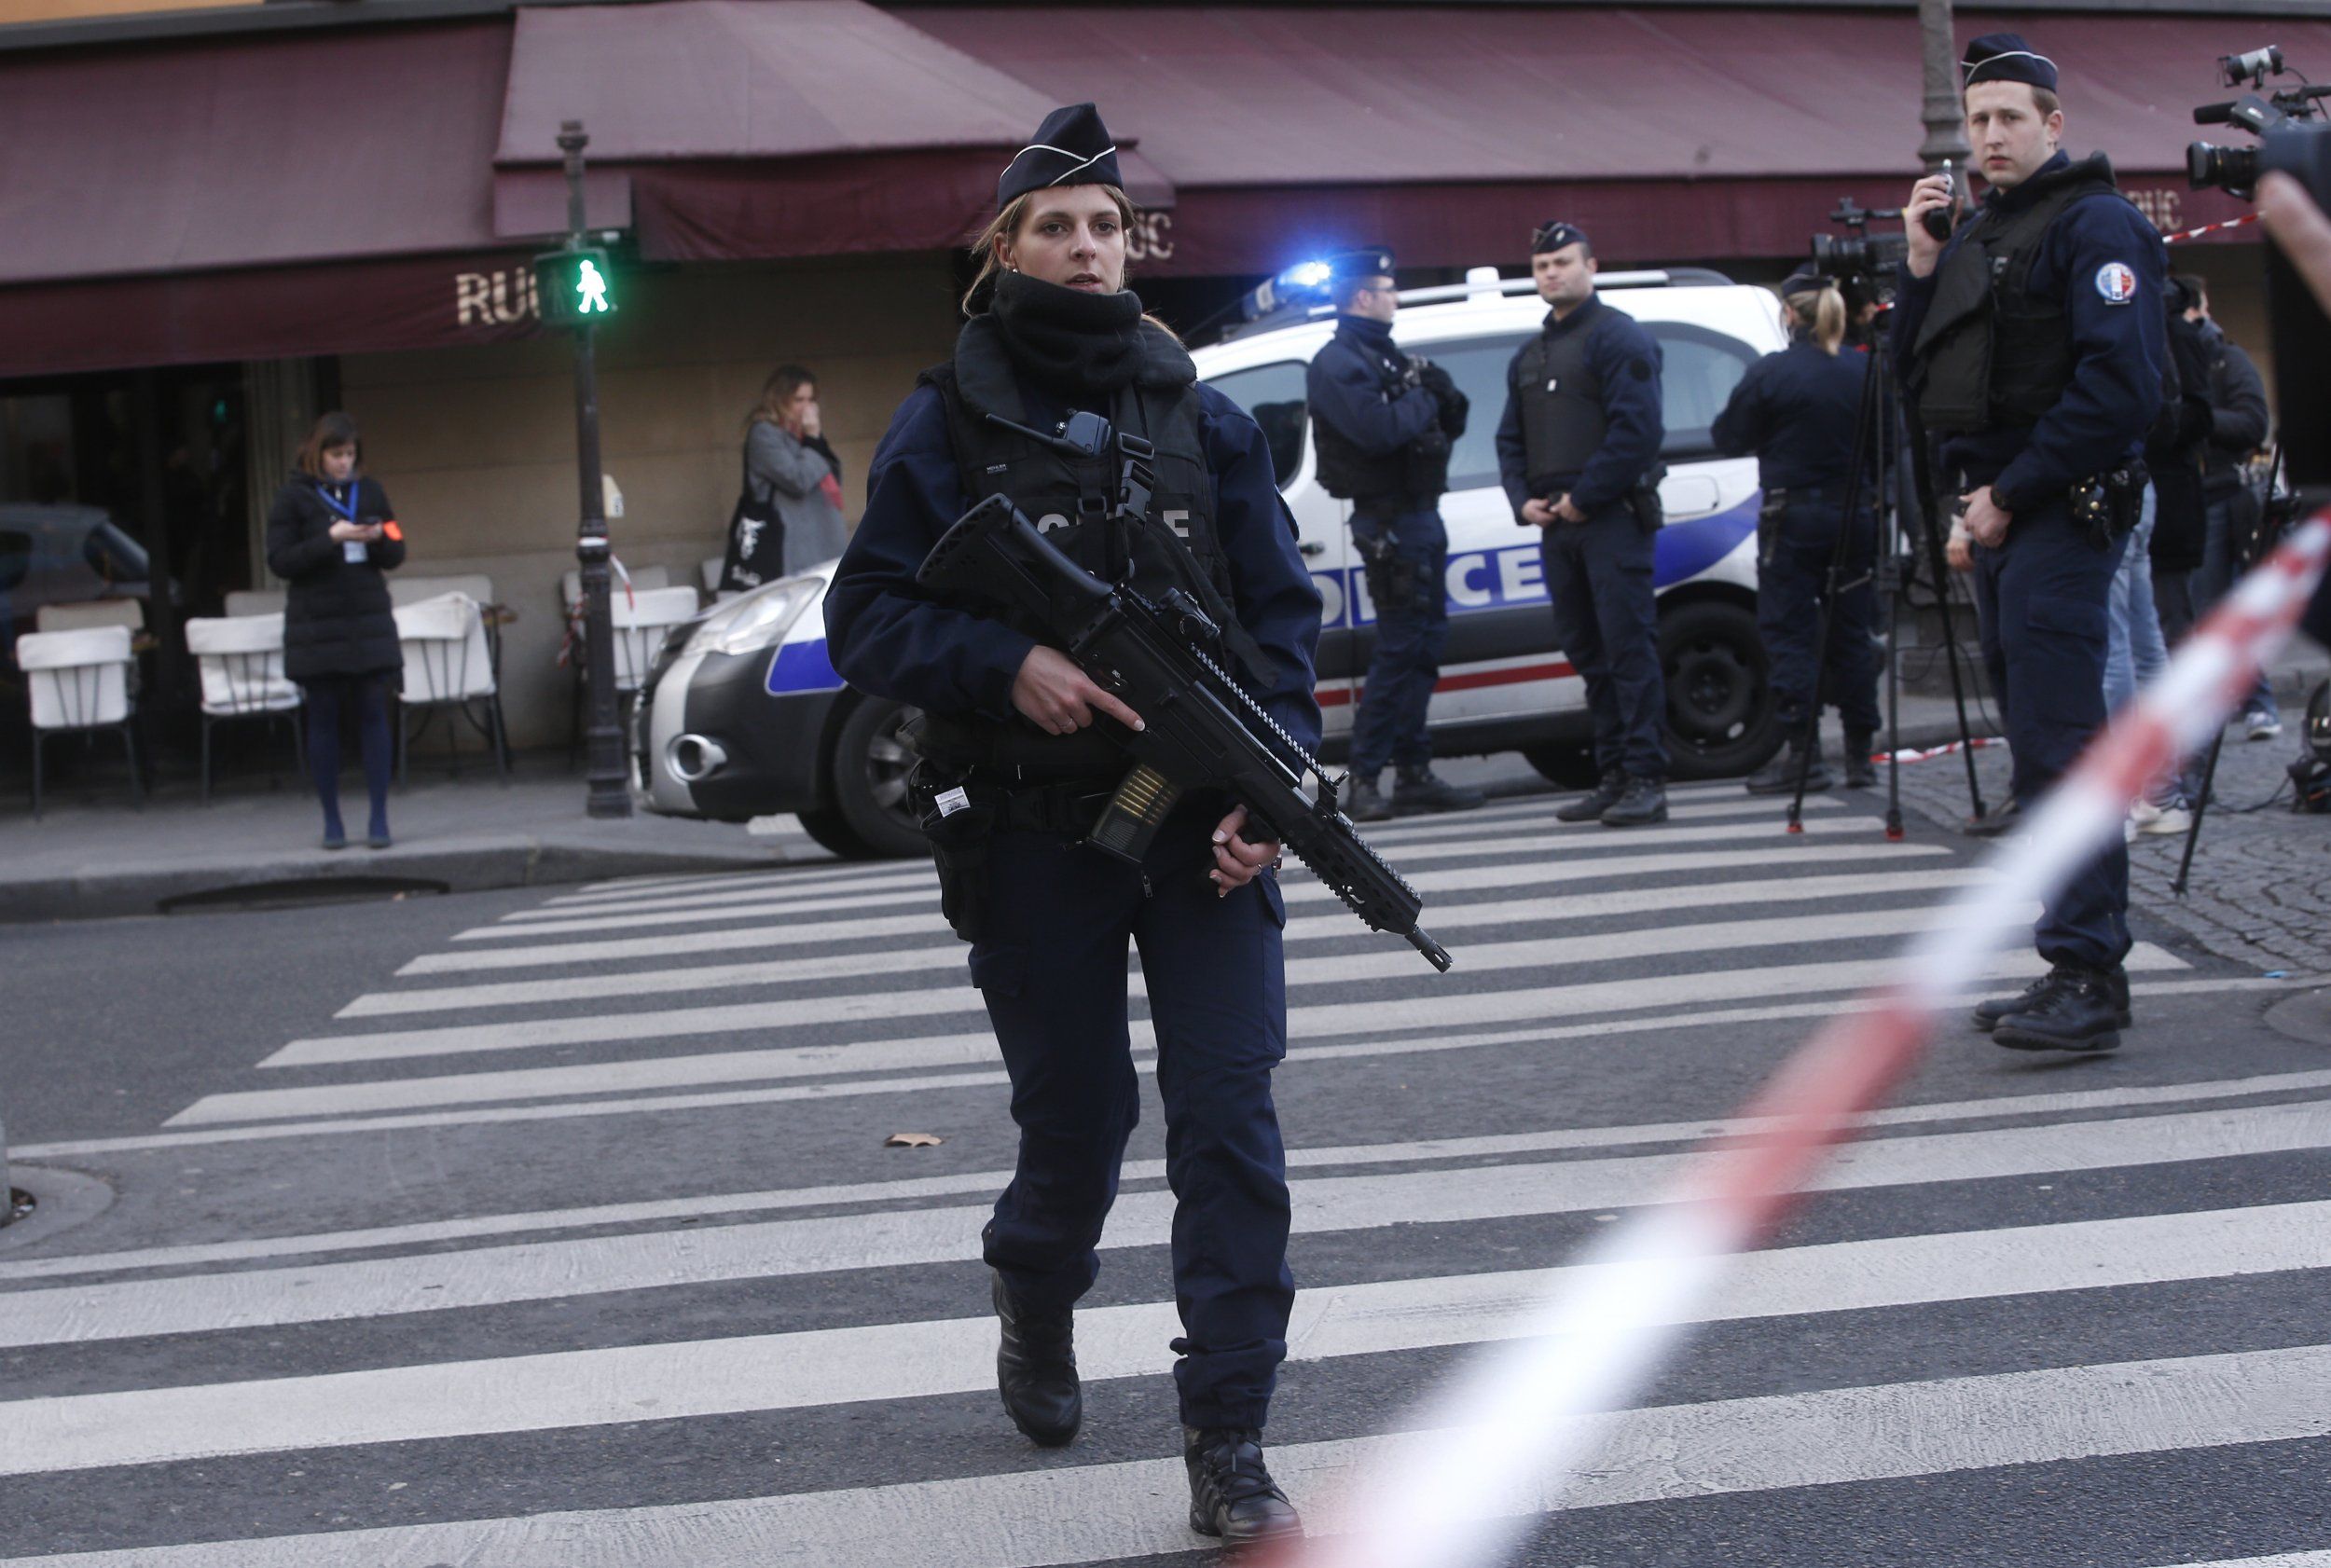 Knifeman attacks soldier in Paris subway, terrorism probe opened